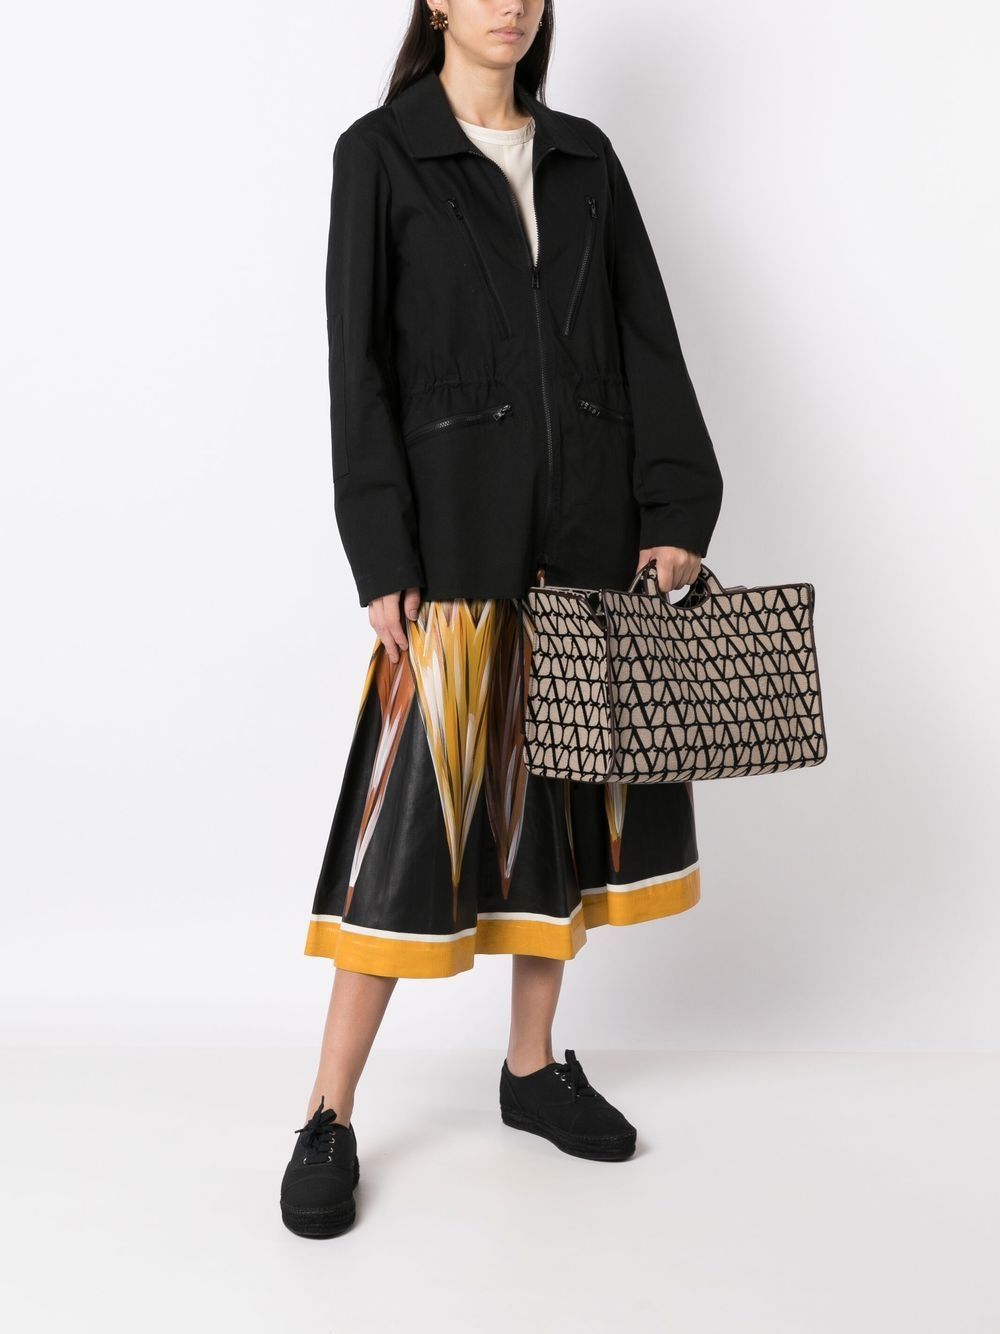 VALENTINO GARAVANI Luxurious LE TROISIEME Tote Handbag in NATURALE/NERO/FONDANT for Women